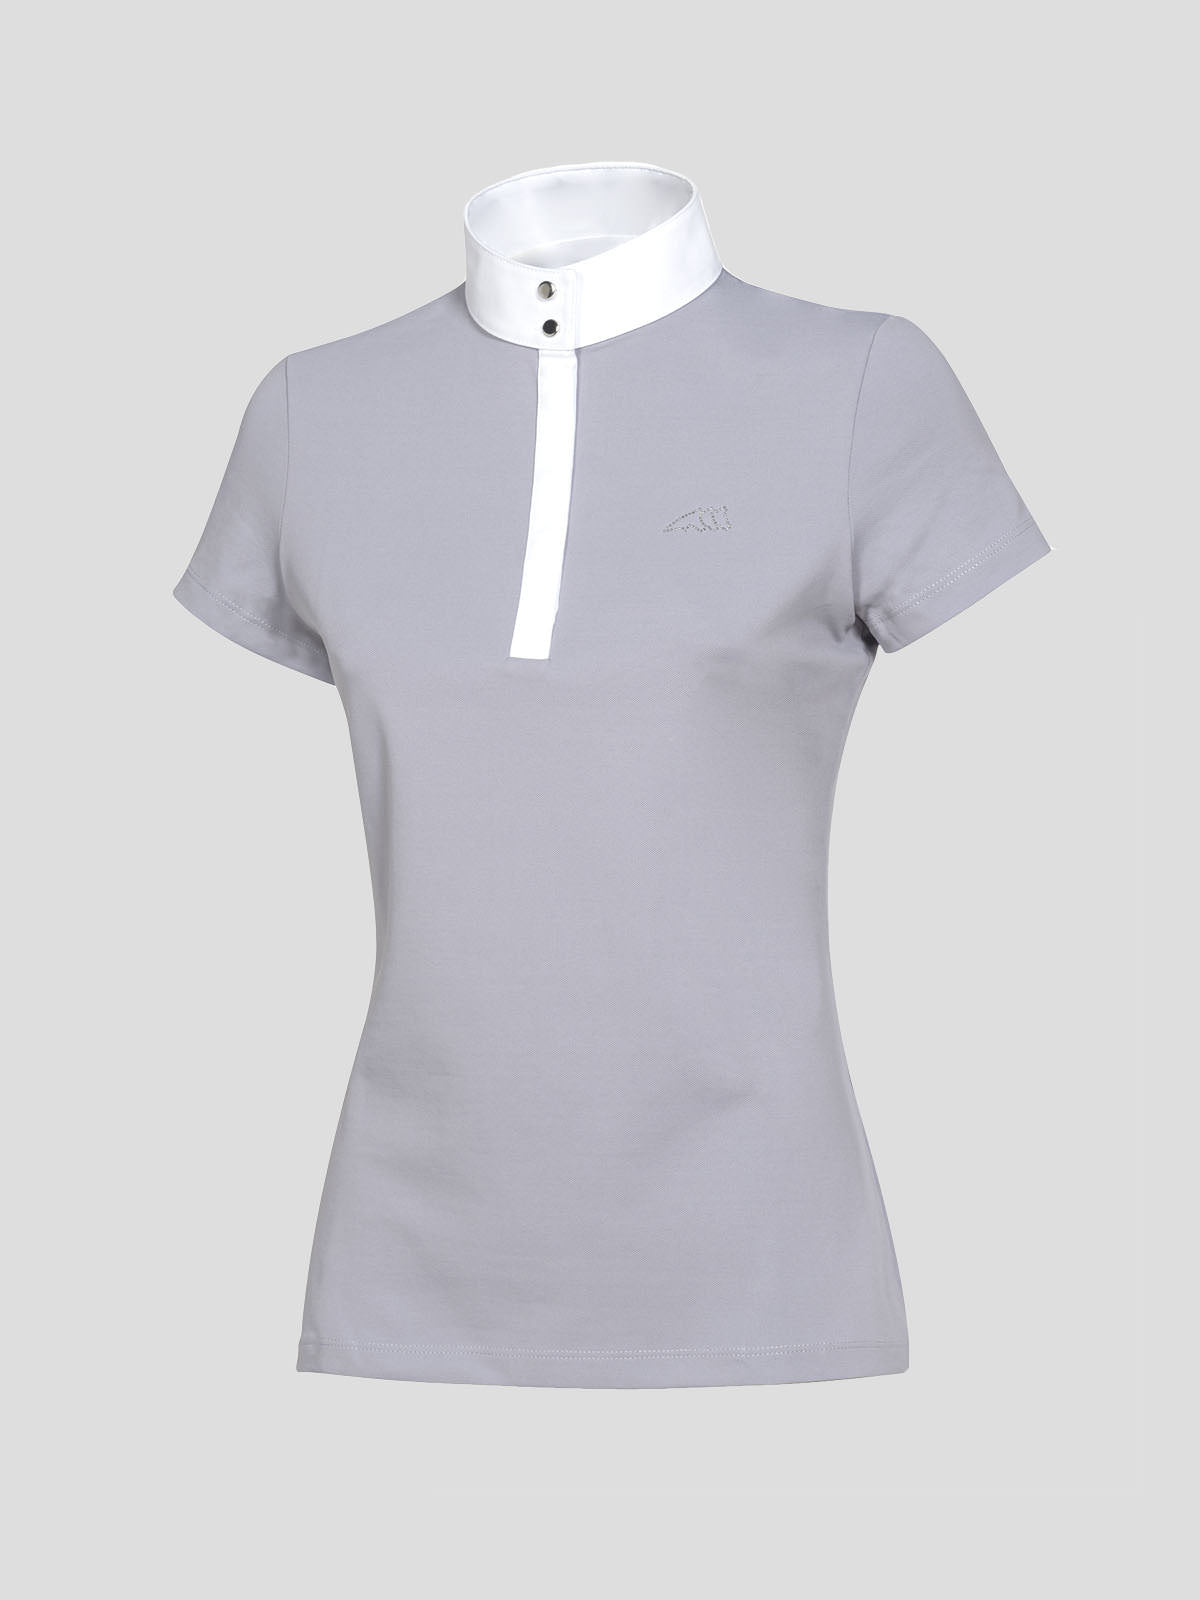 Equiline Ladies Elizzye Show Shirt - Dapple Gray